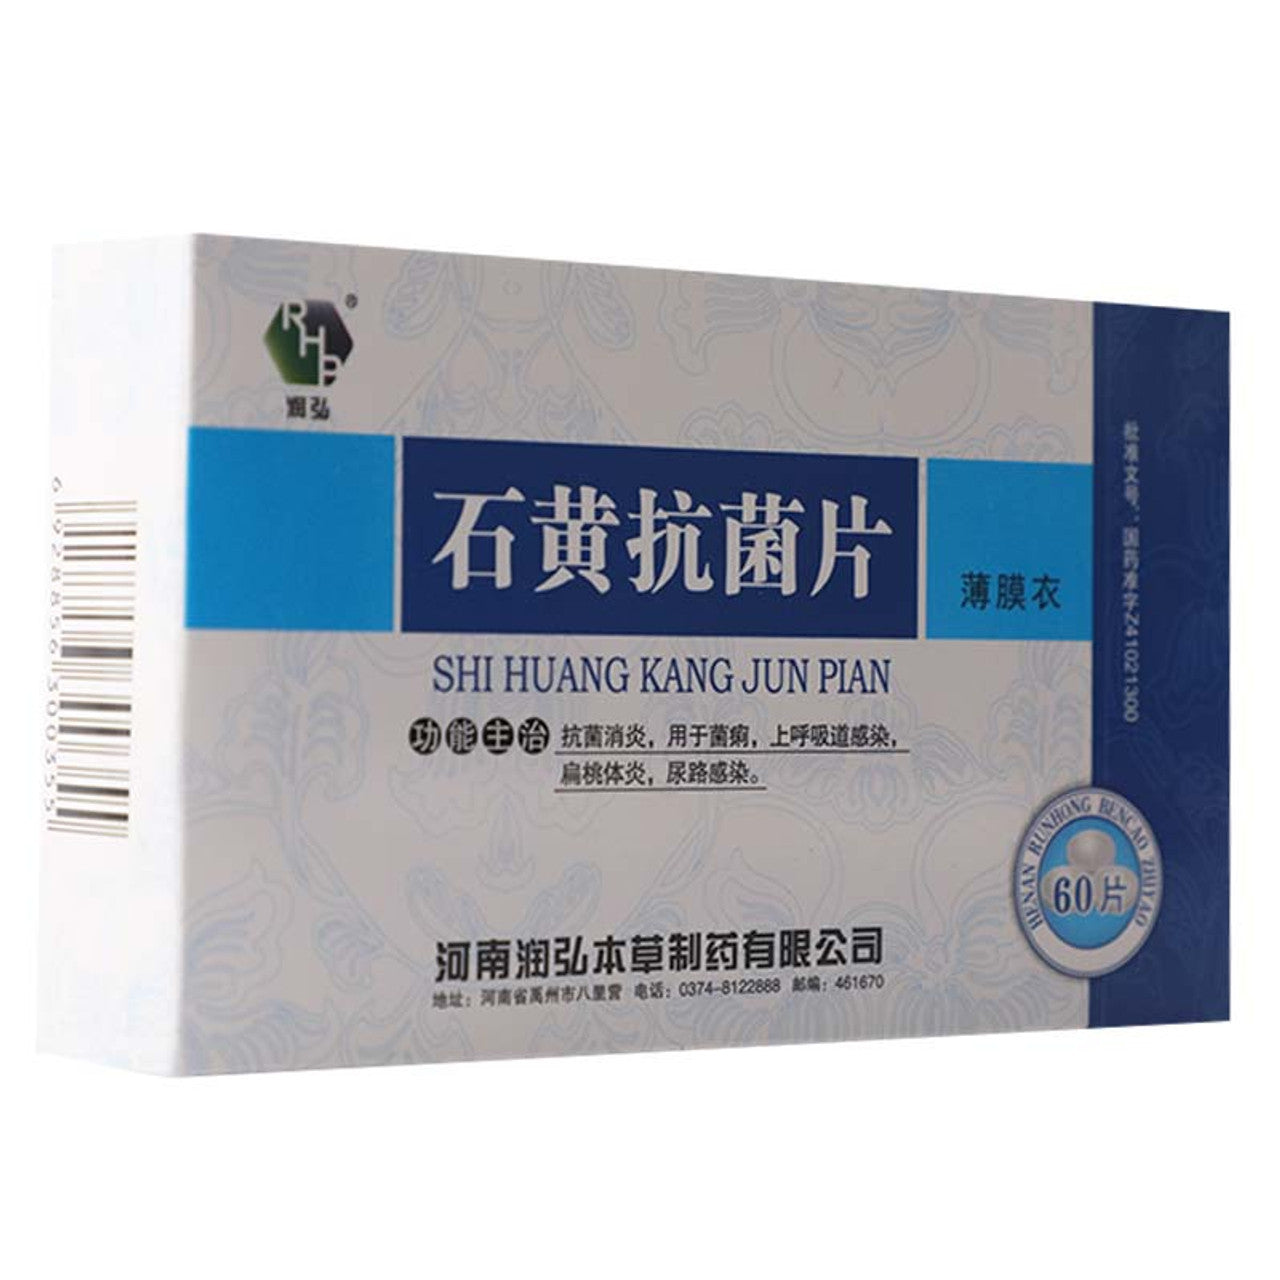 Traditional Chinese Medicine. Shihuang Kangjun Pian or Shihuang Kangjun Tablets for upper respiratory tract infection, tonsillitis, urinary tract infection.. SHI HUANG KANG JUN PIAN. 0.35g*60 Tablets*5 boxes